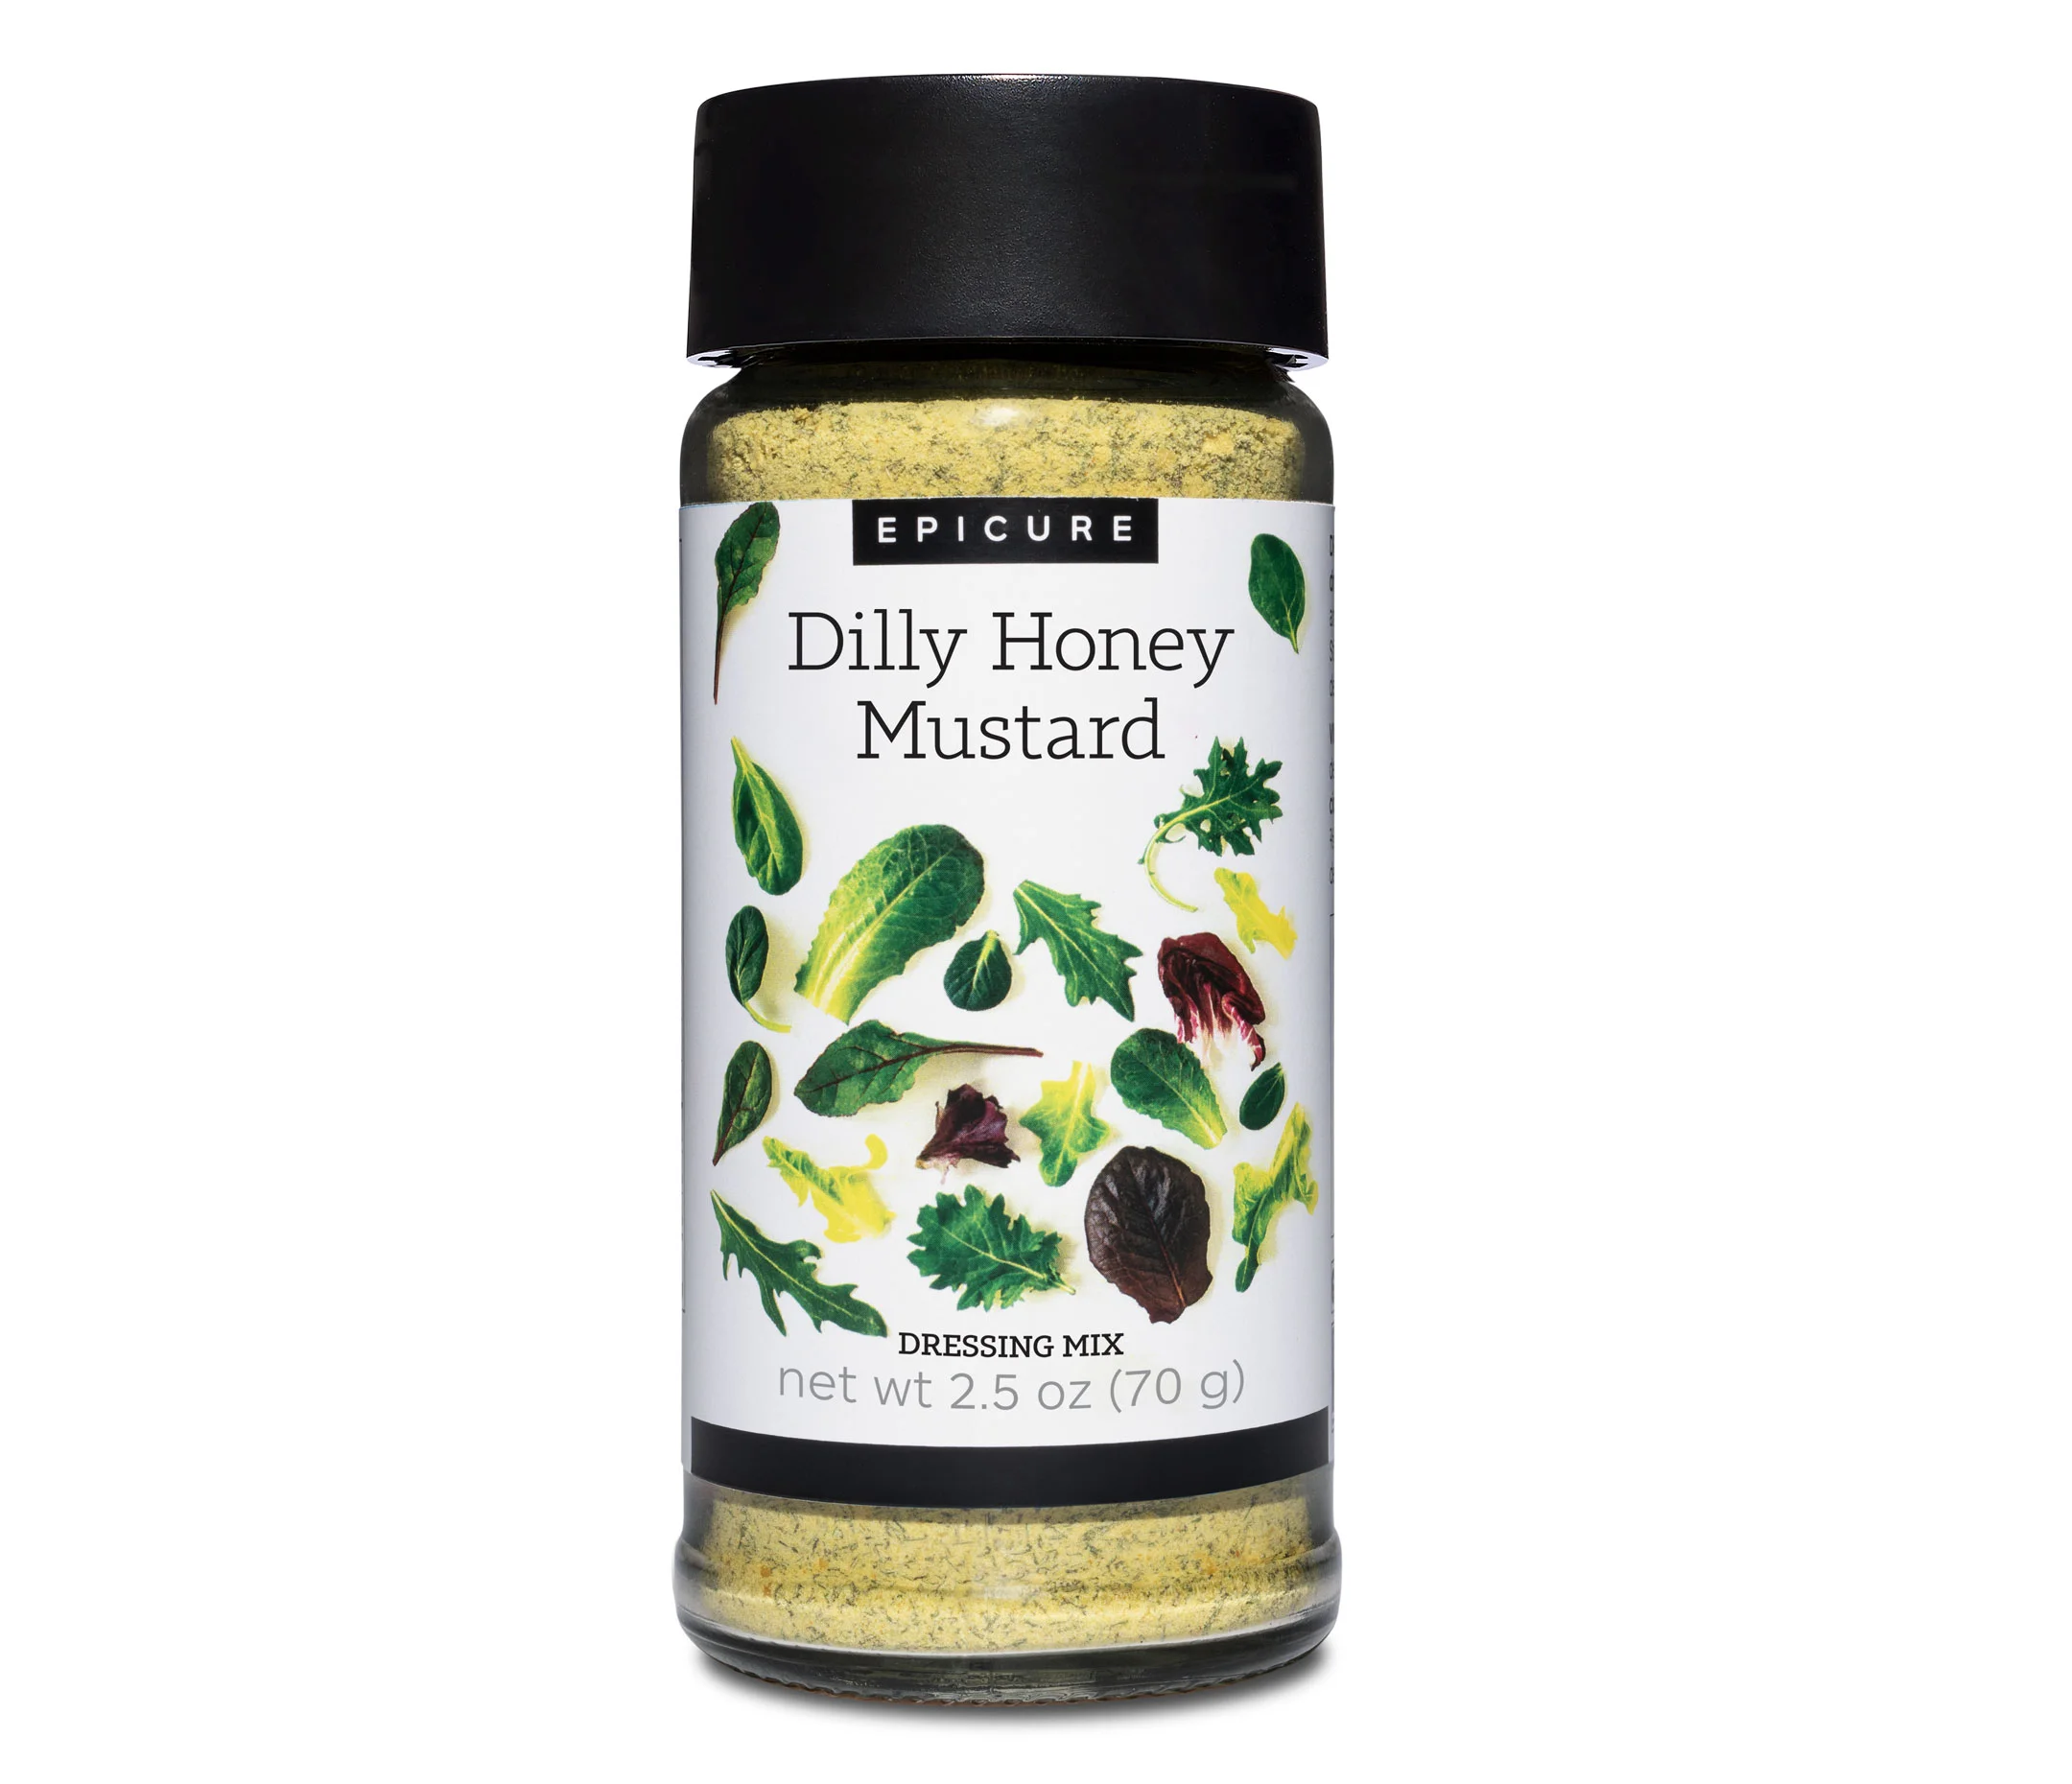 Dilly Honey Mustard Dressing Mix